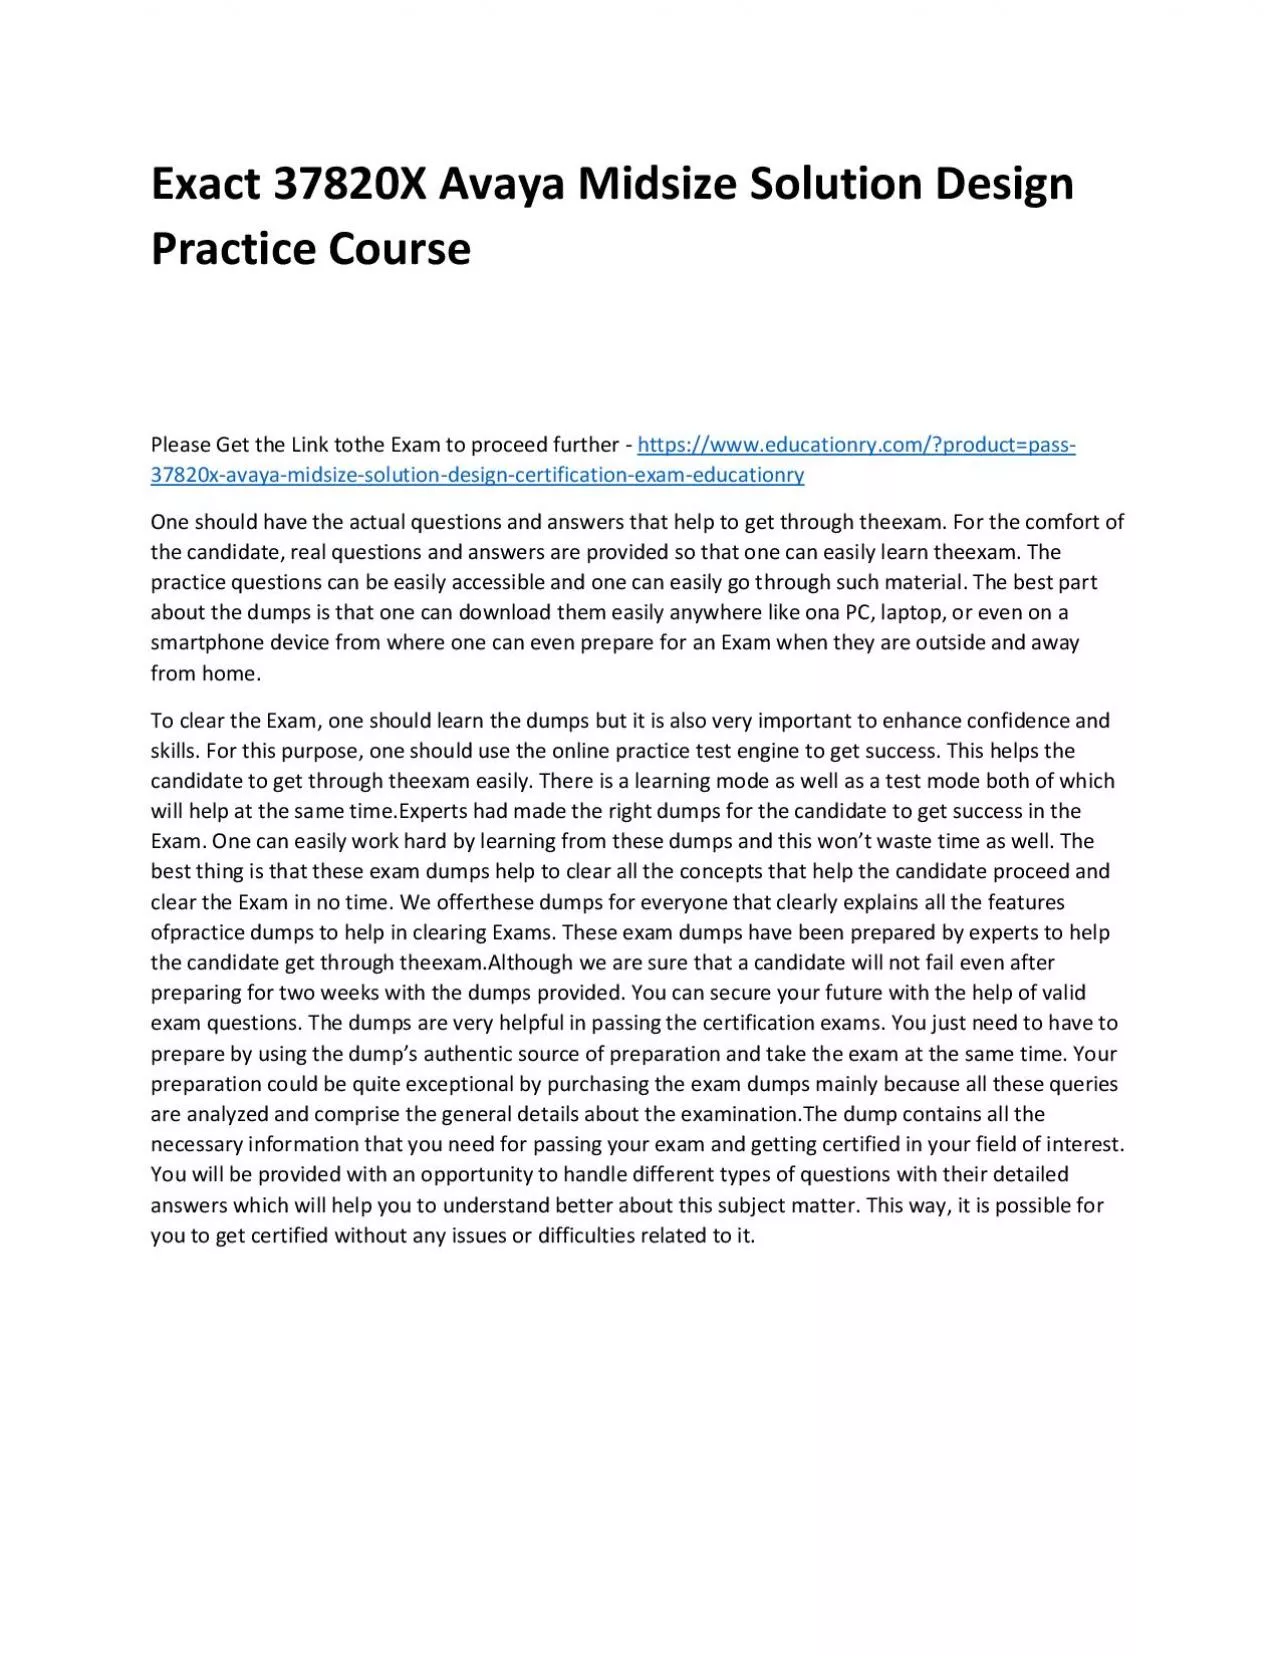 Exact 37820X Avaya Midsize Solution Design Practice Course